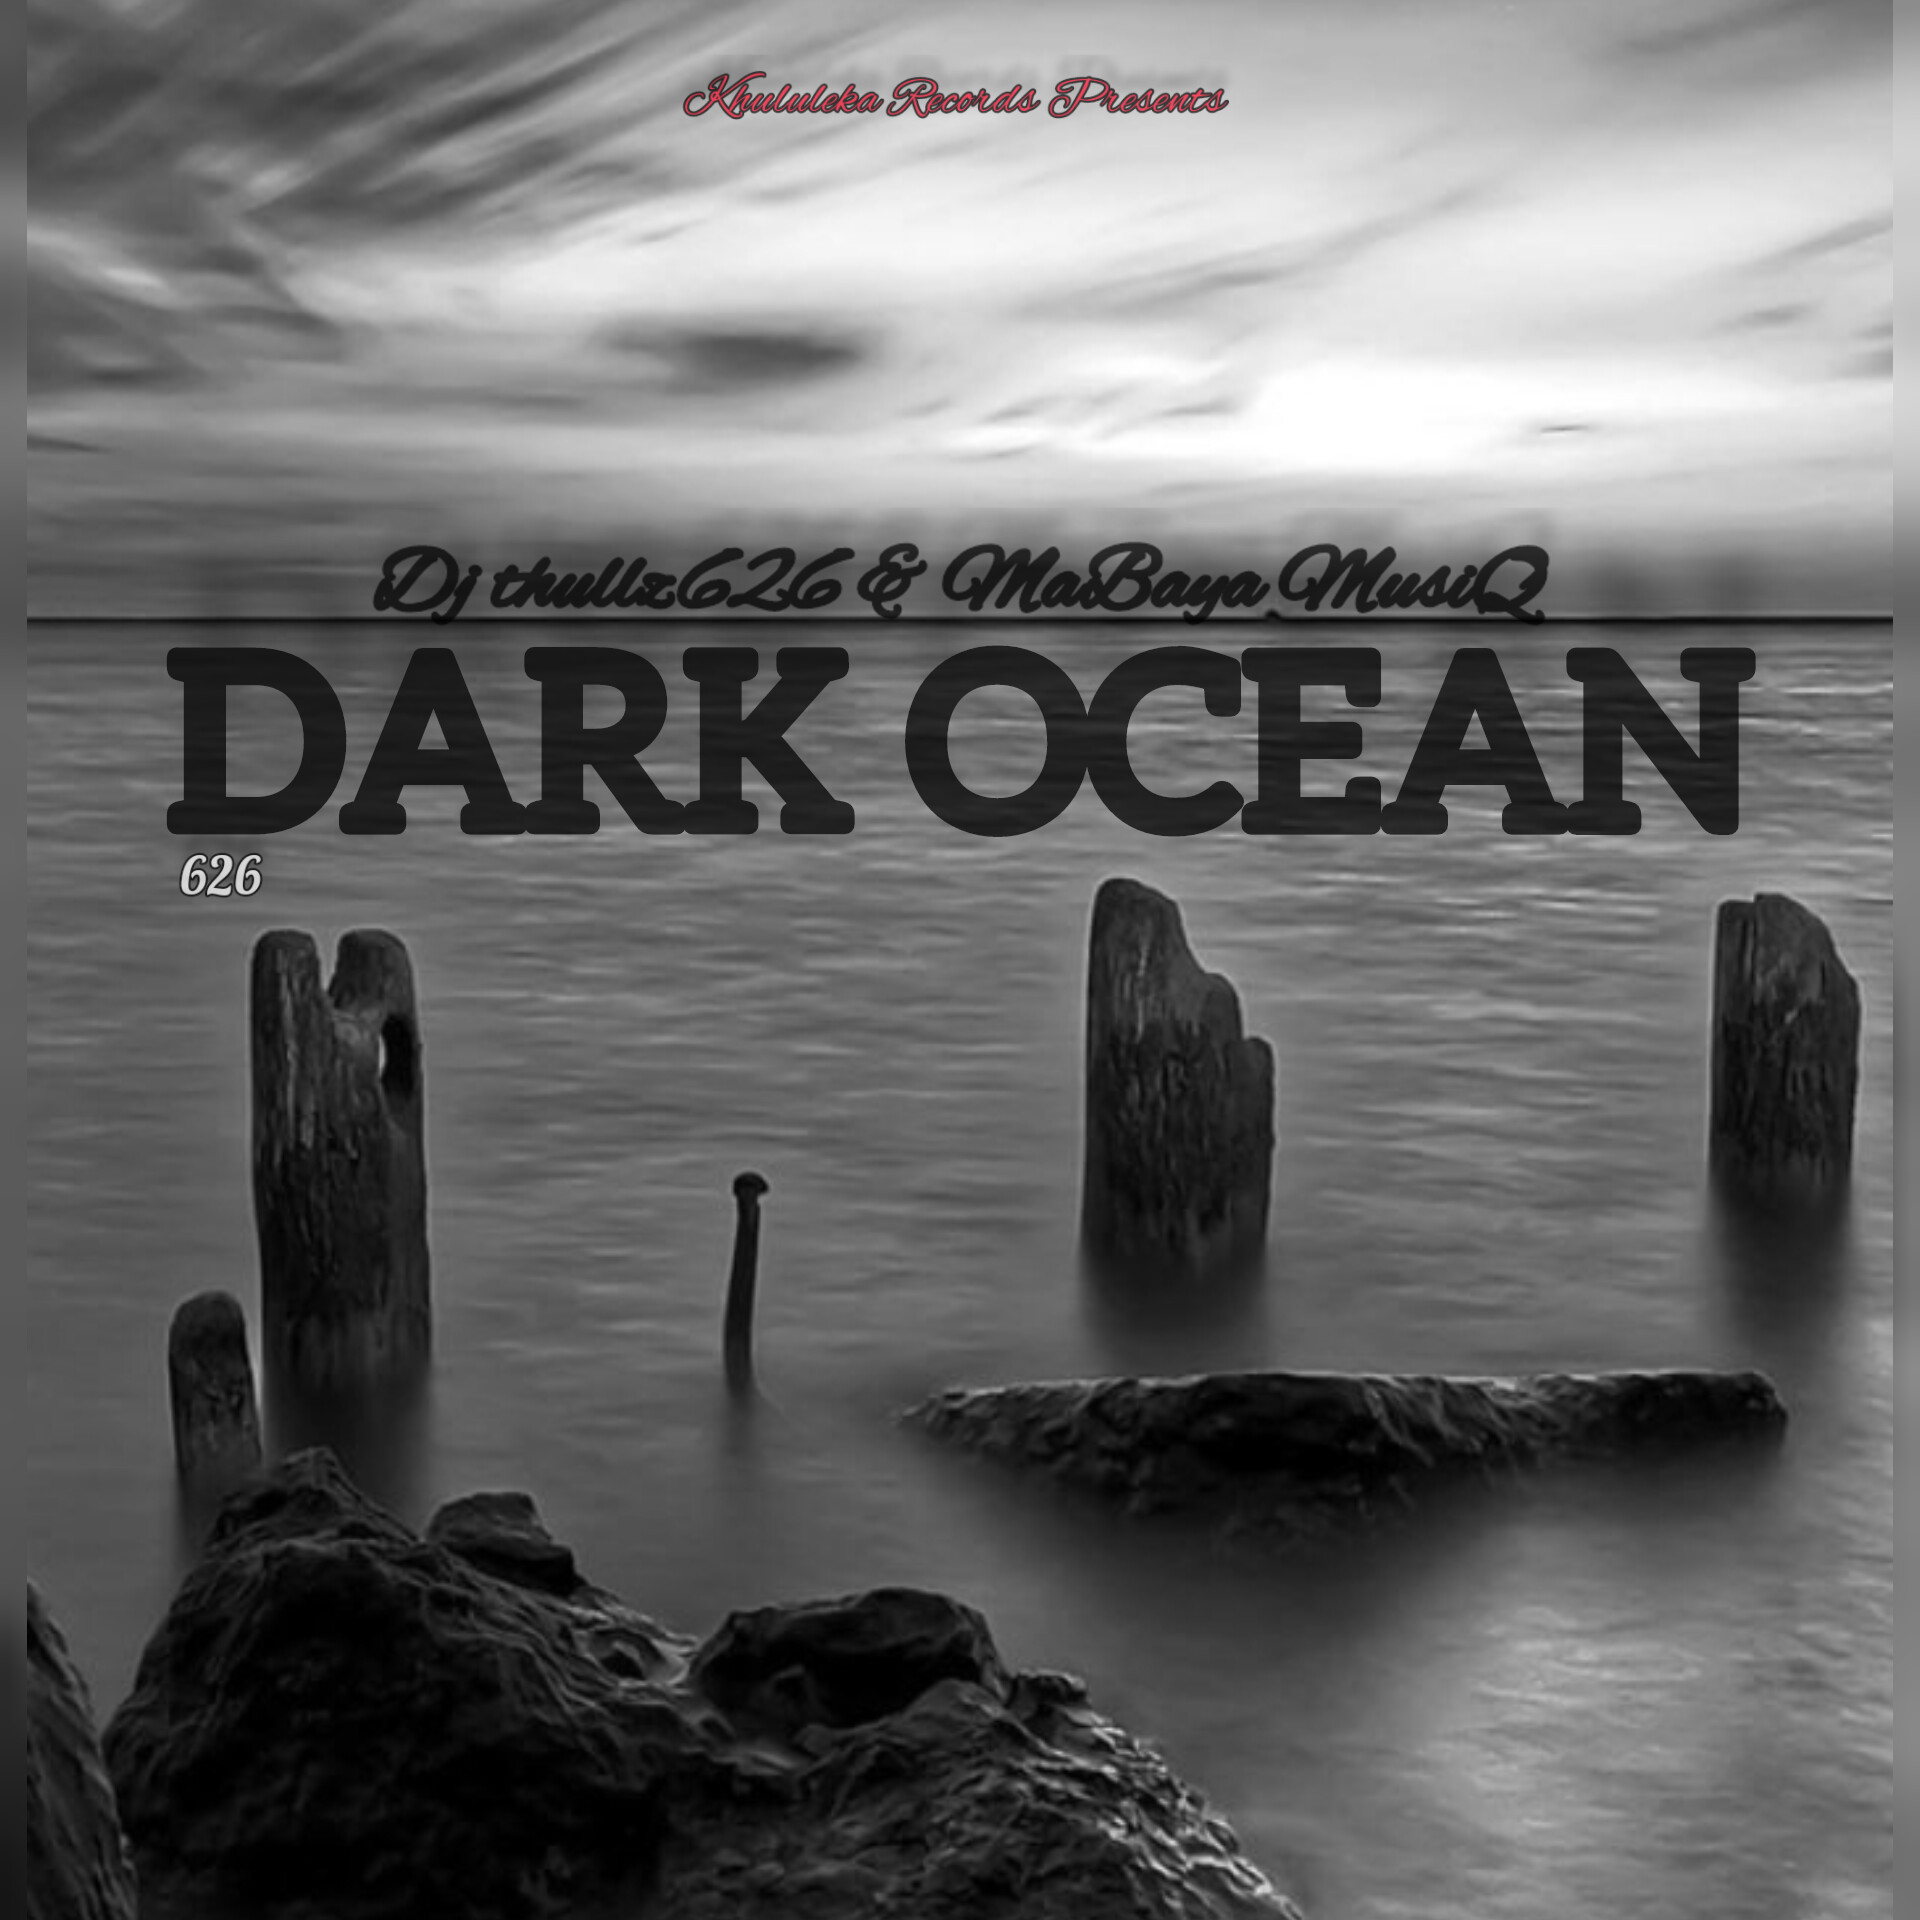 Dark Ocean - Dj thullz626 &MaBaya MusiQ